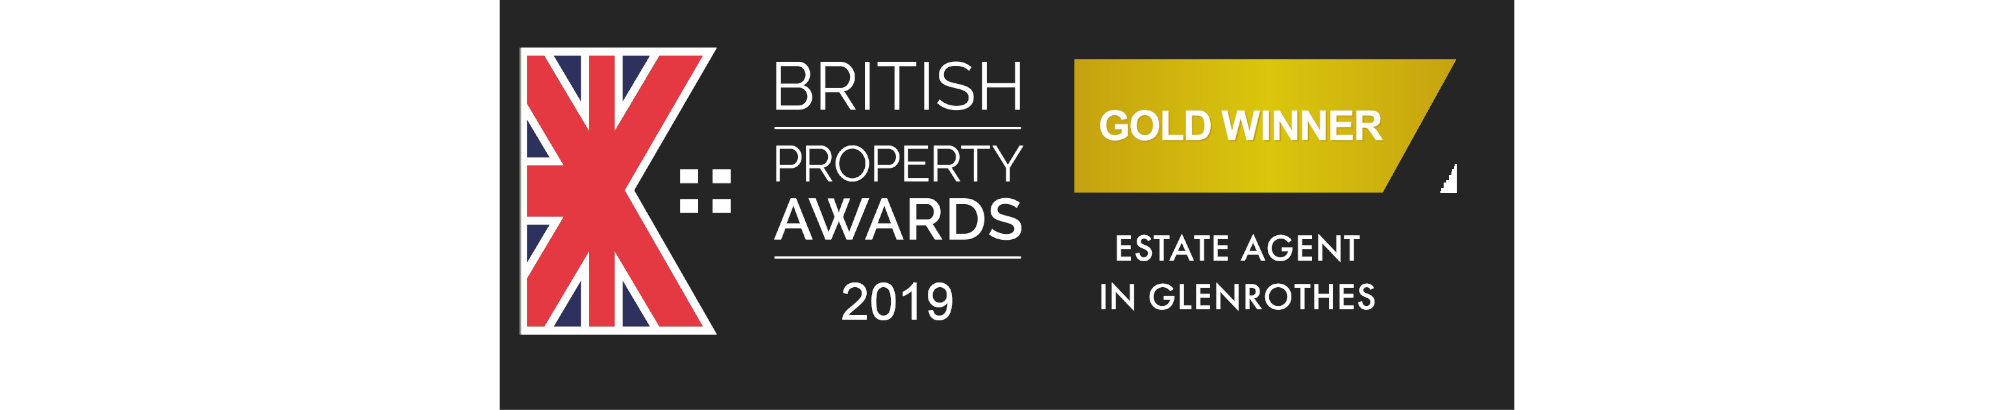 2019 British Property Awards Gold Winner